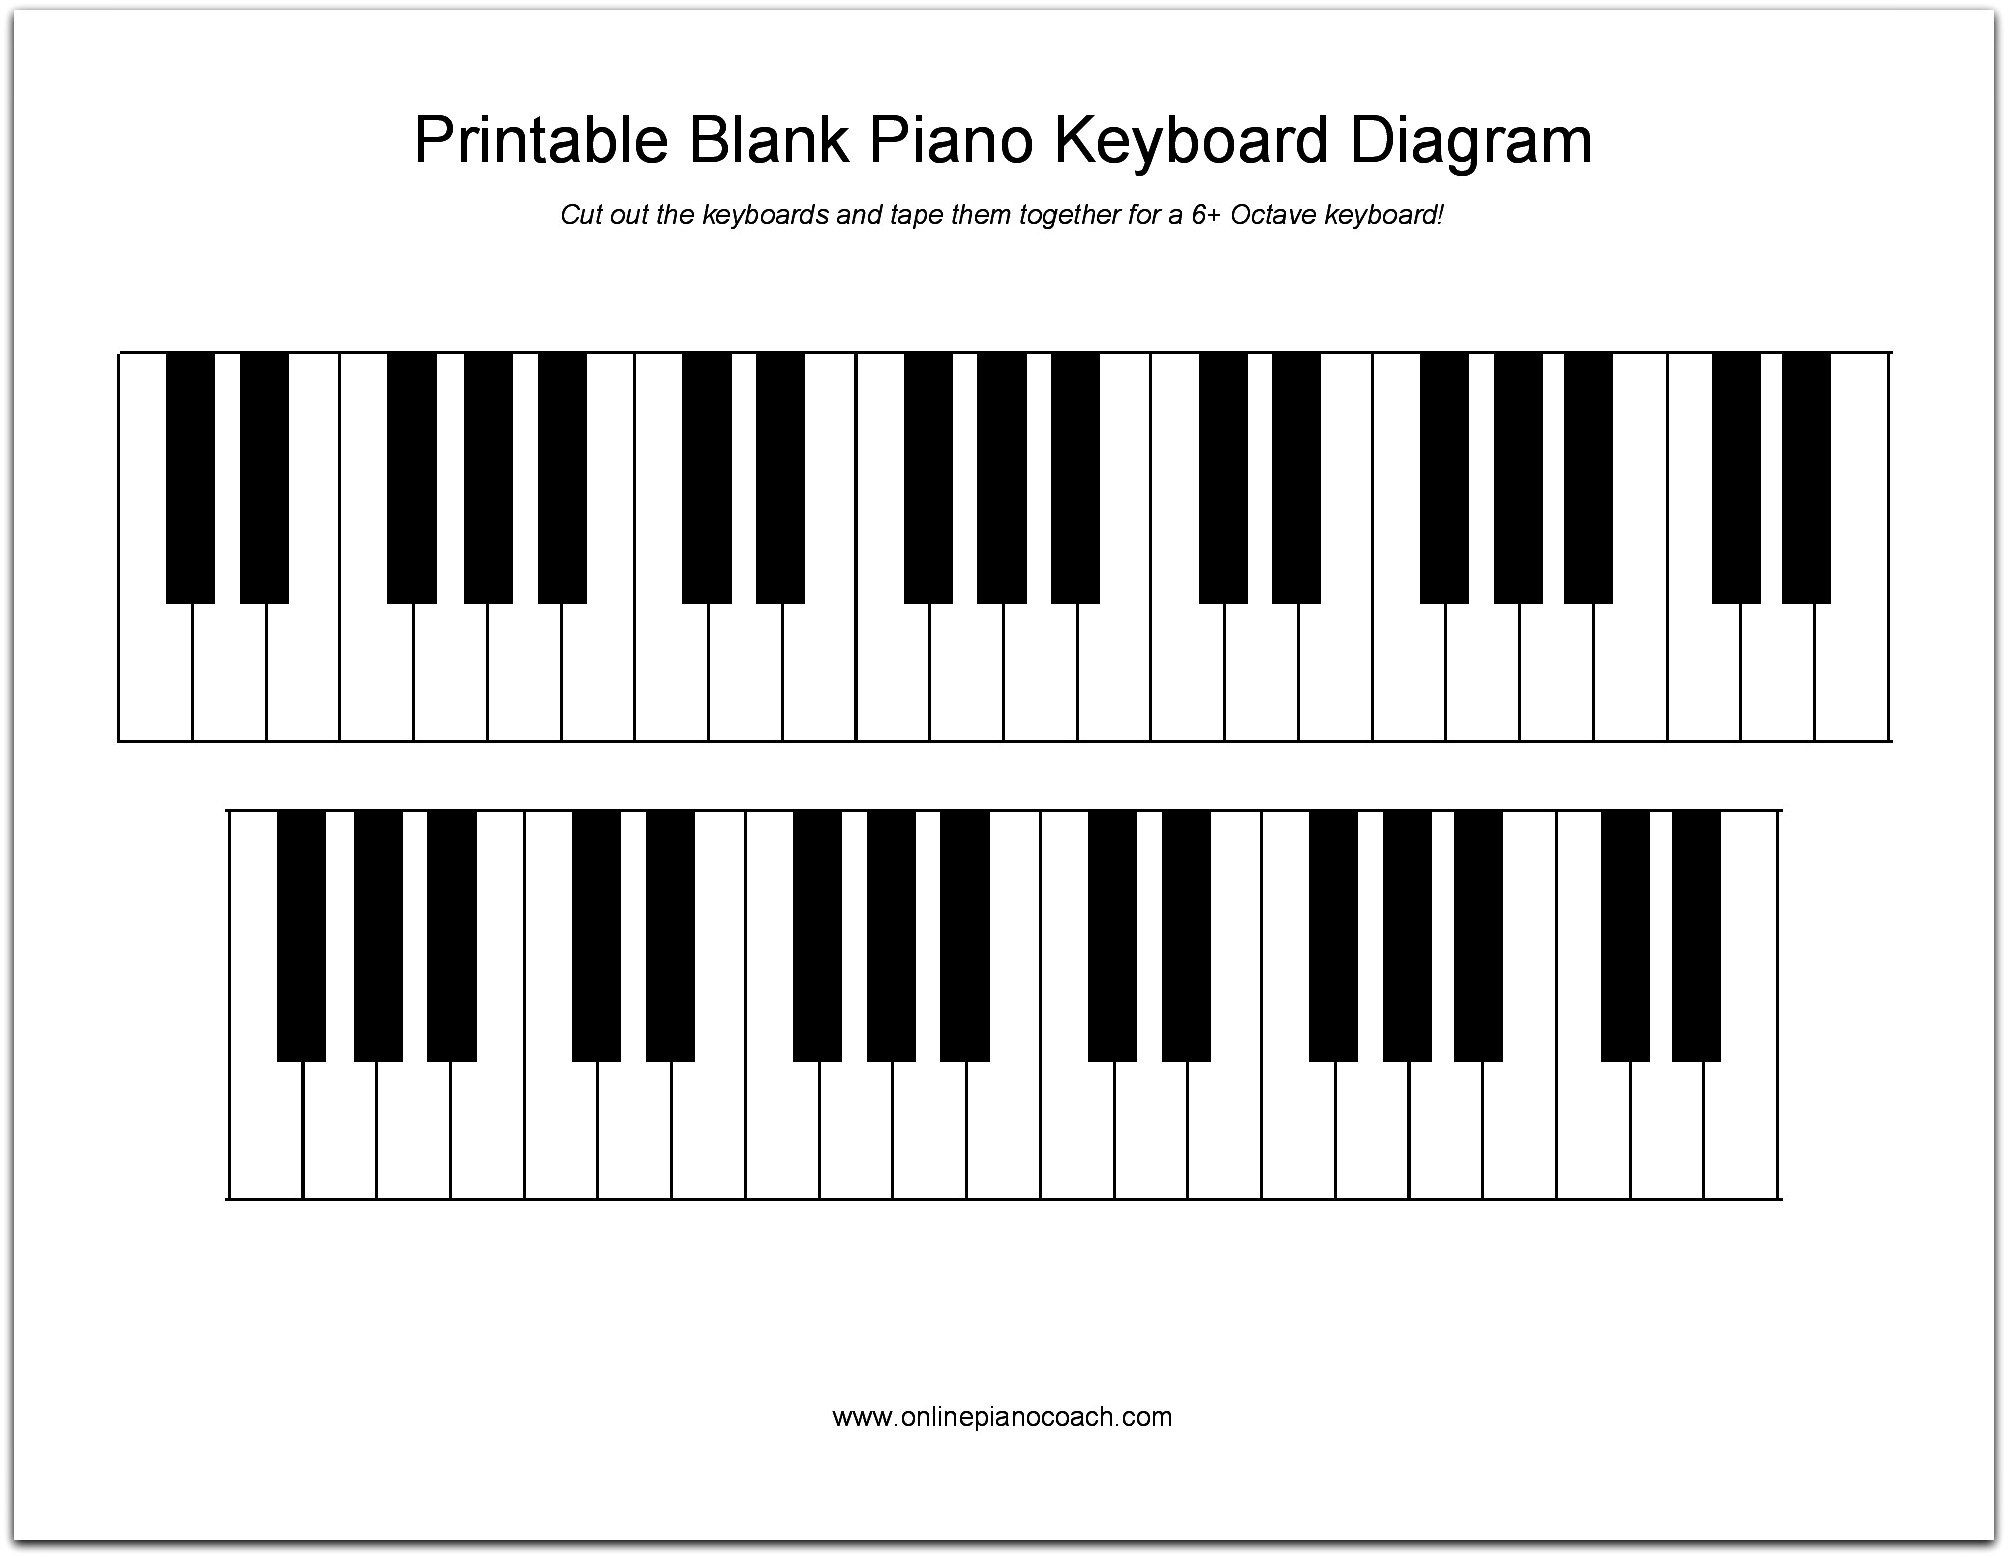 Printable Piano Keyboard Diagram